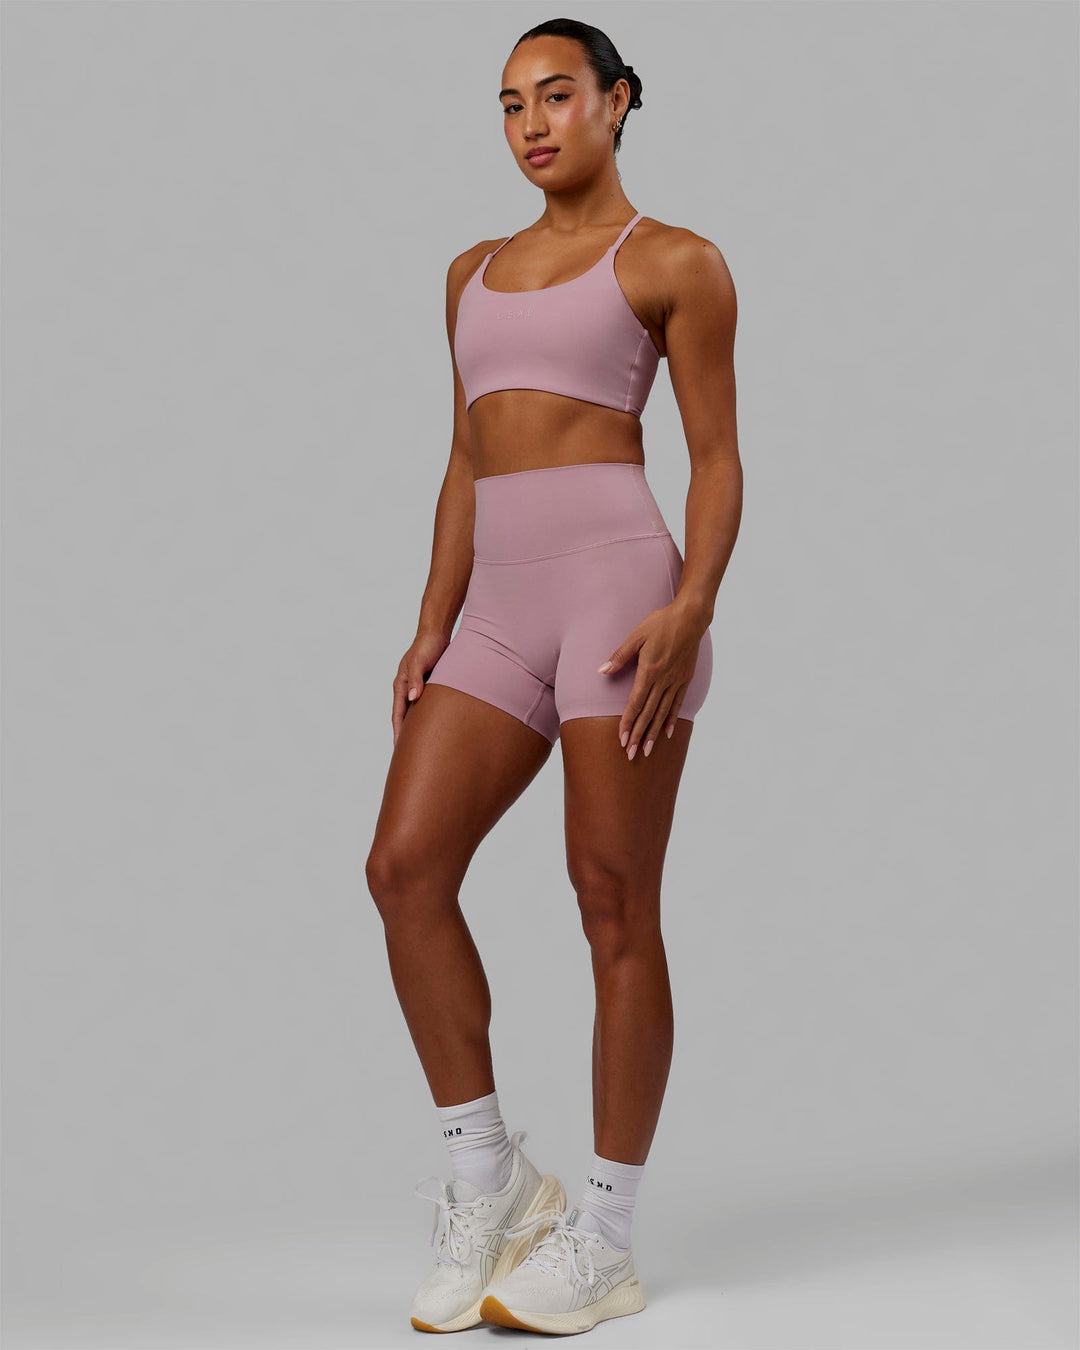 Elixir X-Length Shorts - Cosmetic Pink